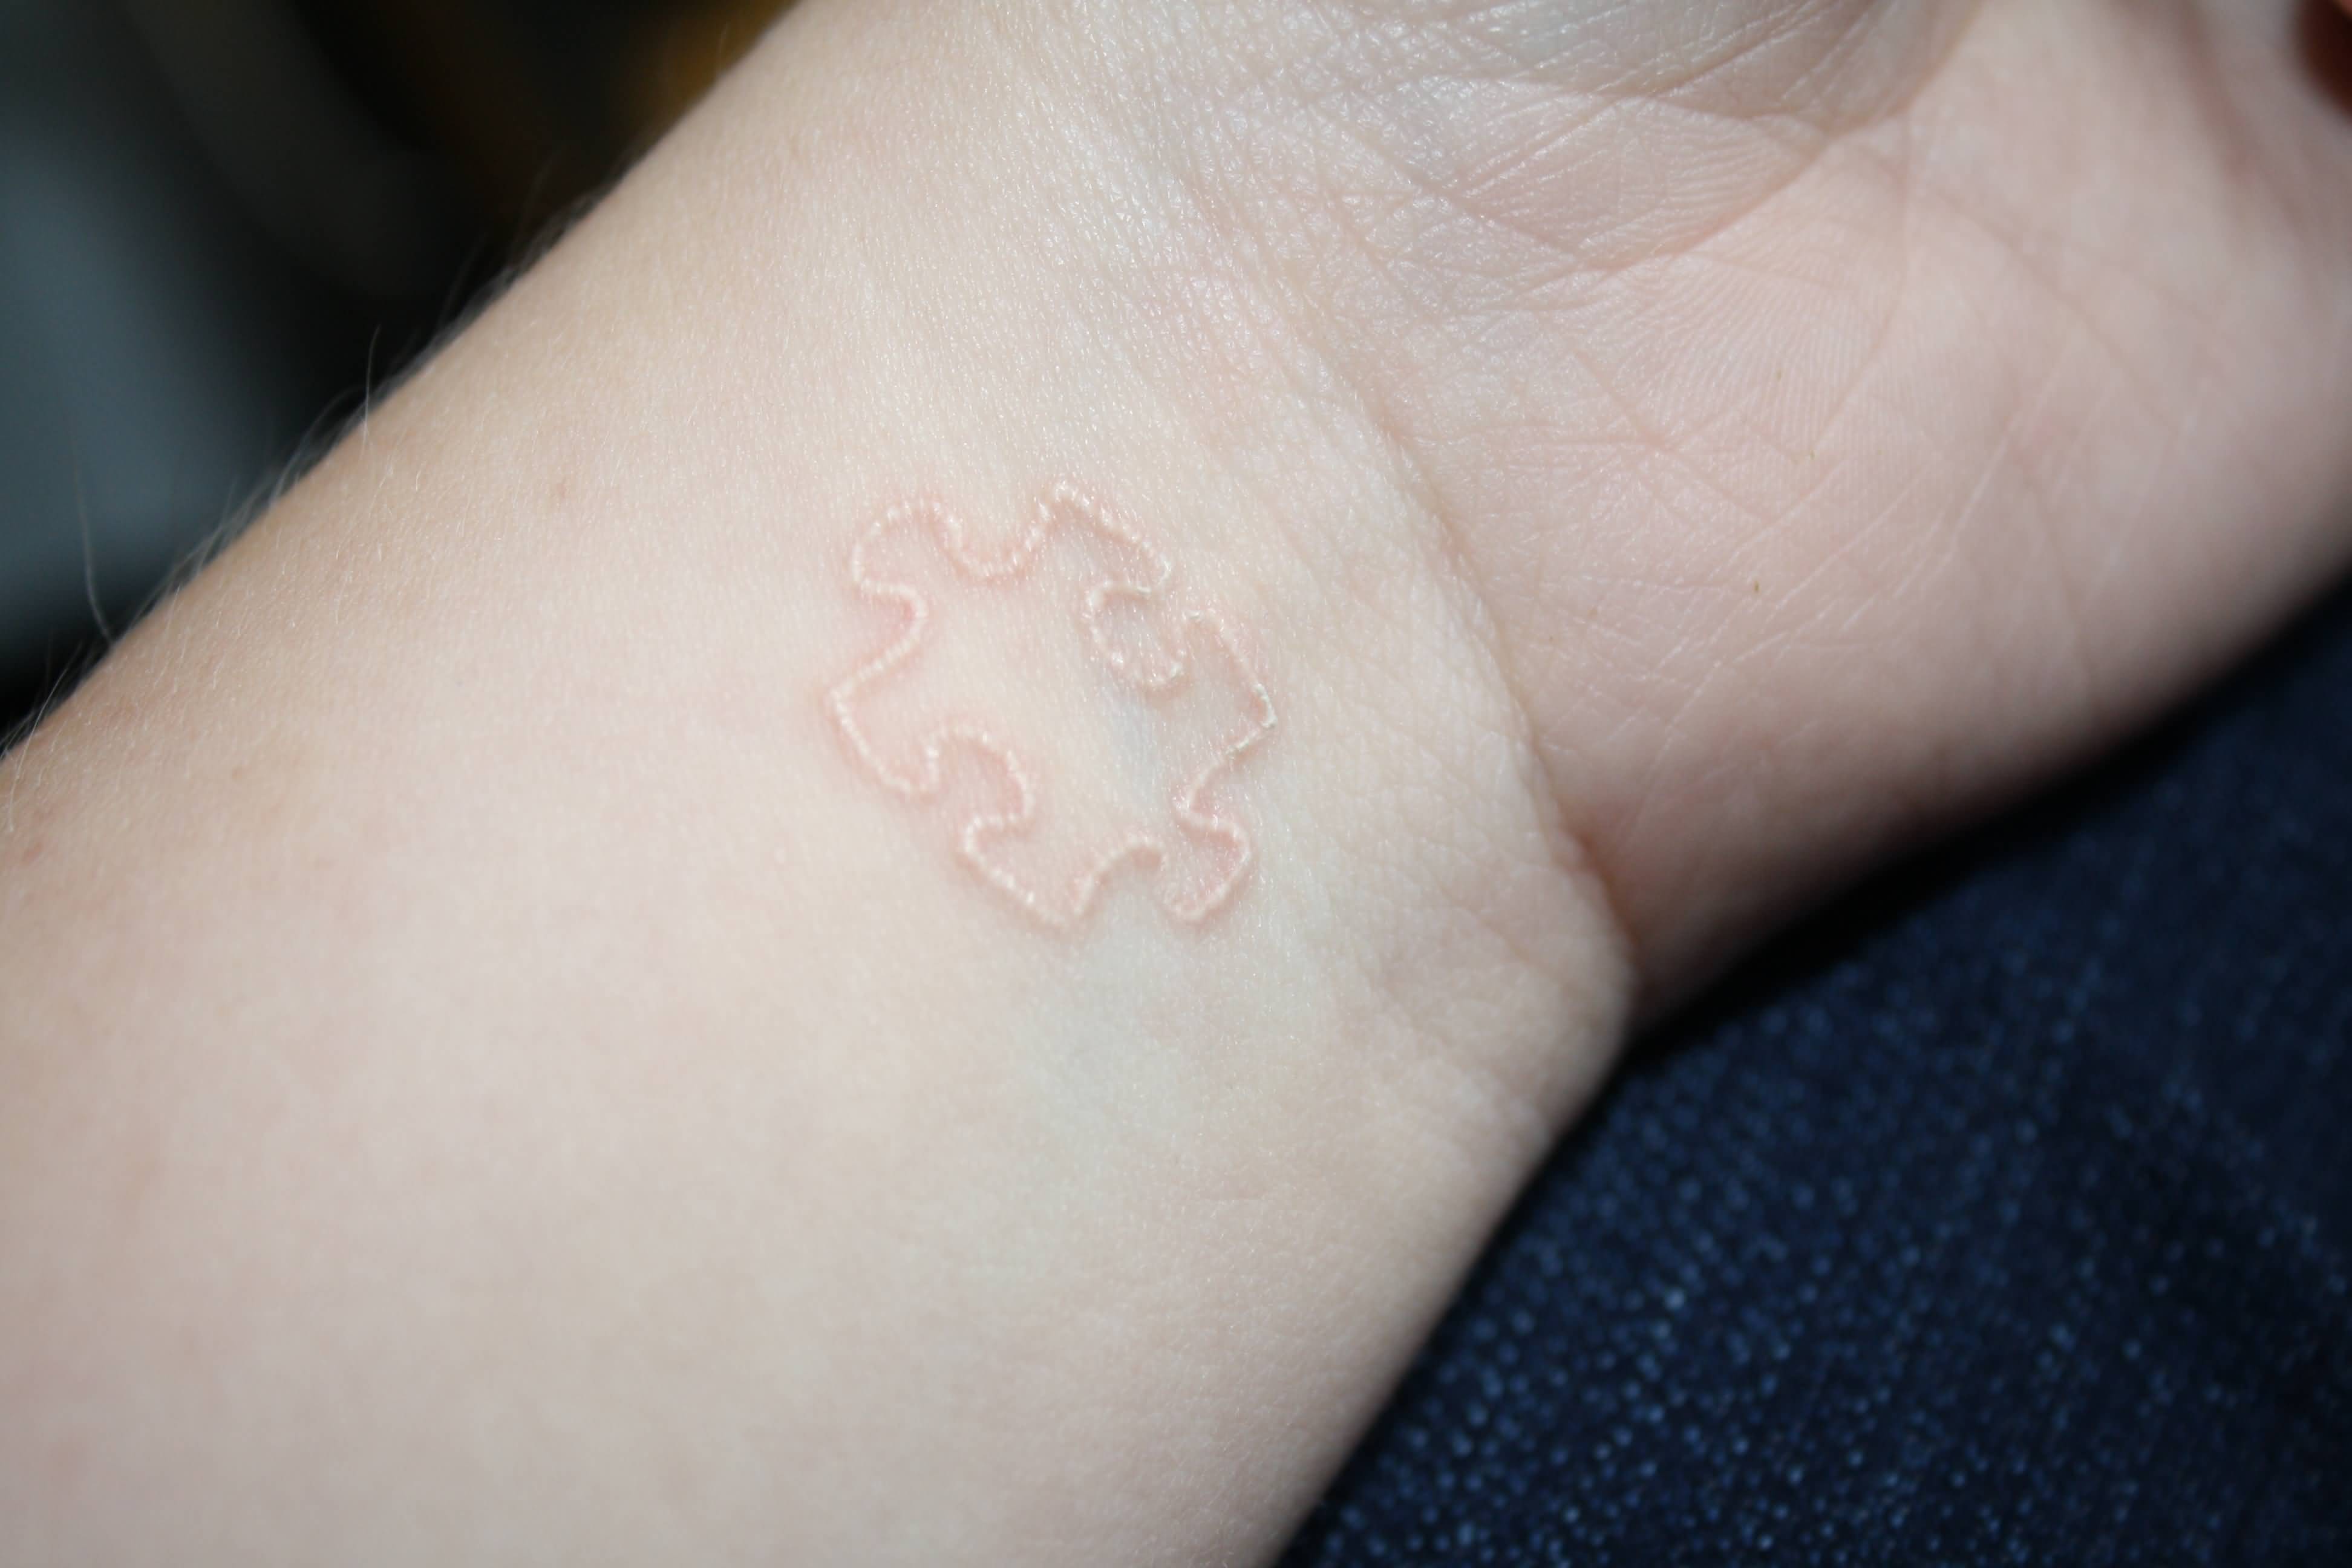 White Ink Puzzle Piece Tattoo On Wrist